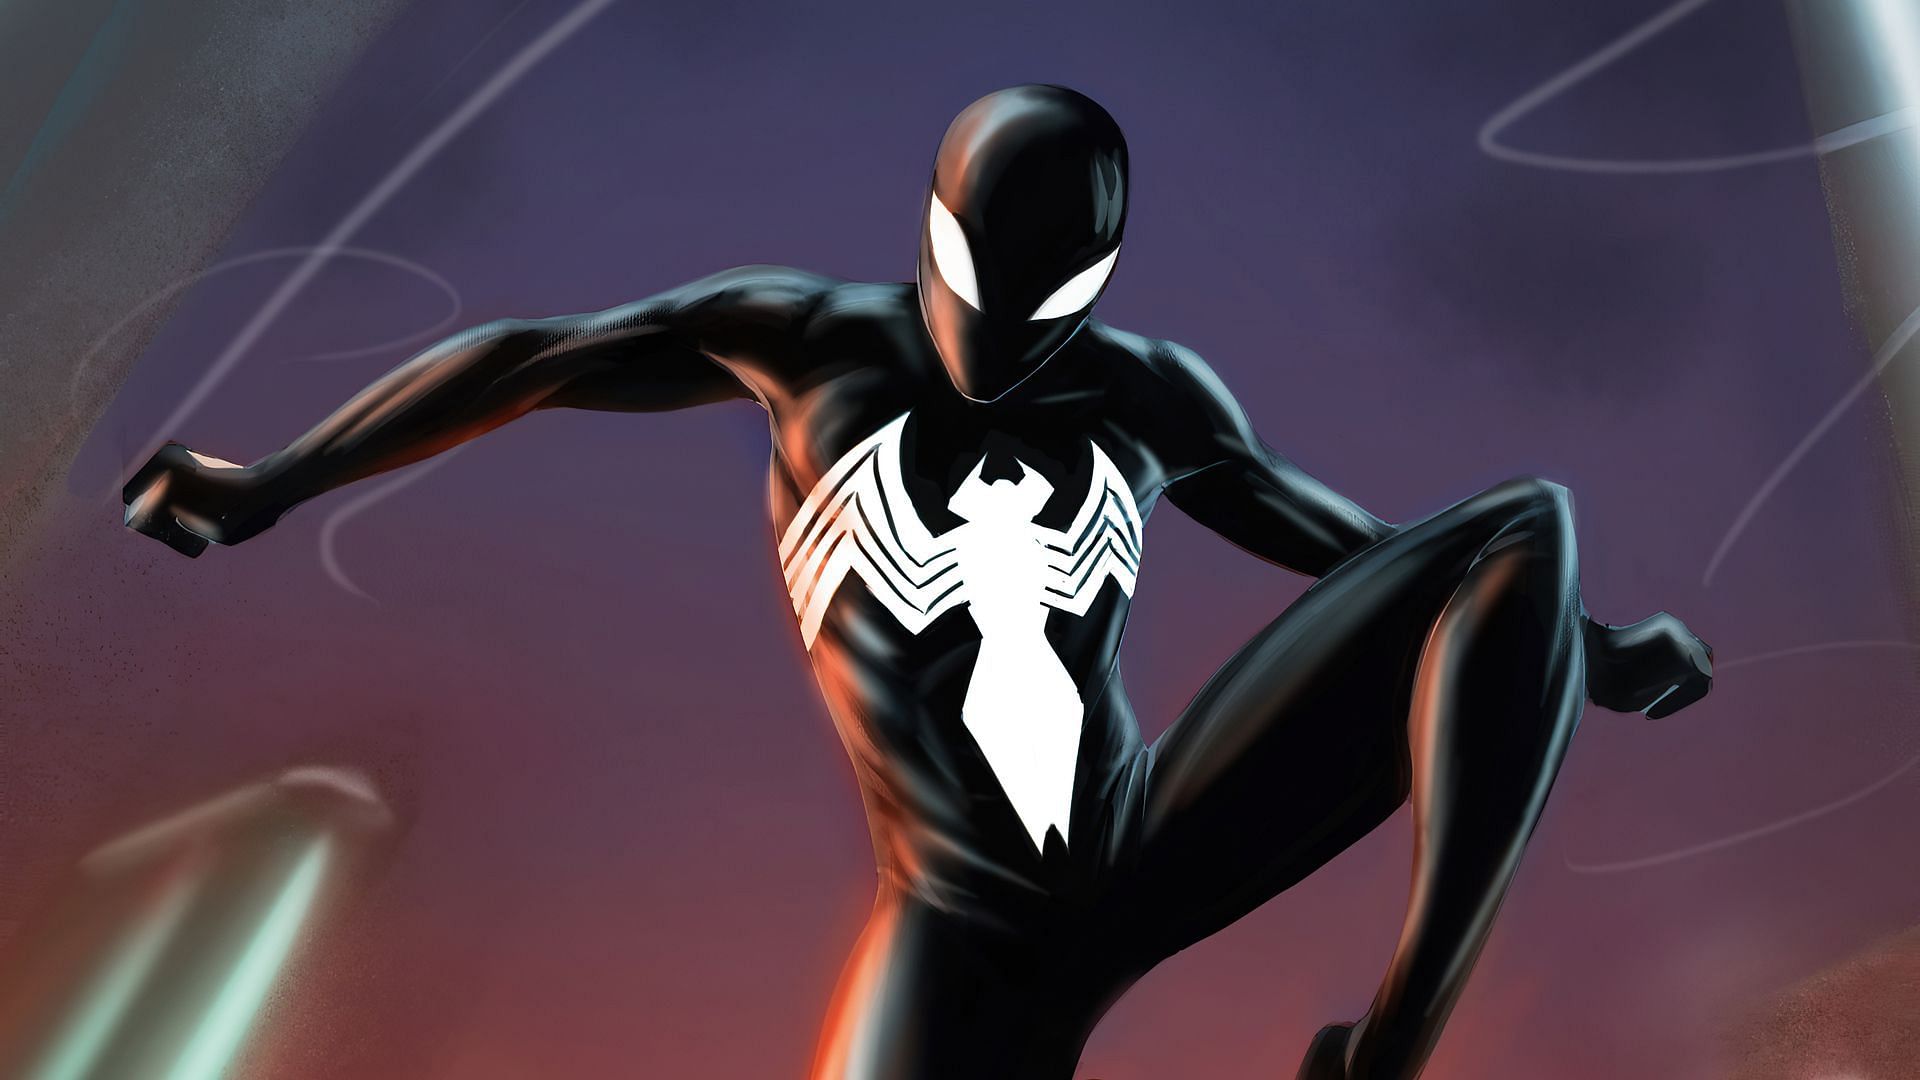 Black Suit Spider-Man (Image Credit: Marvel Comics)